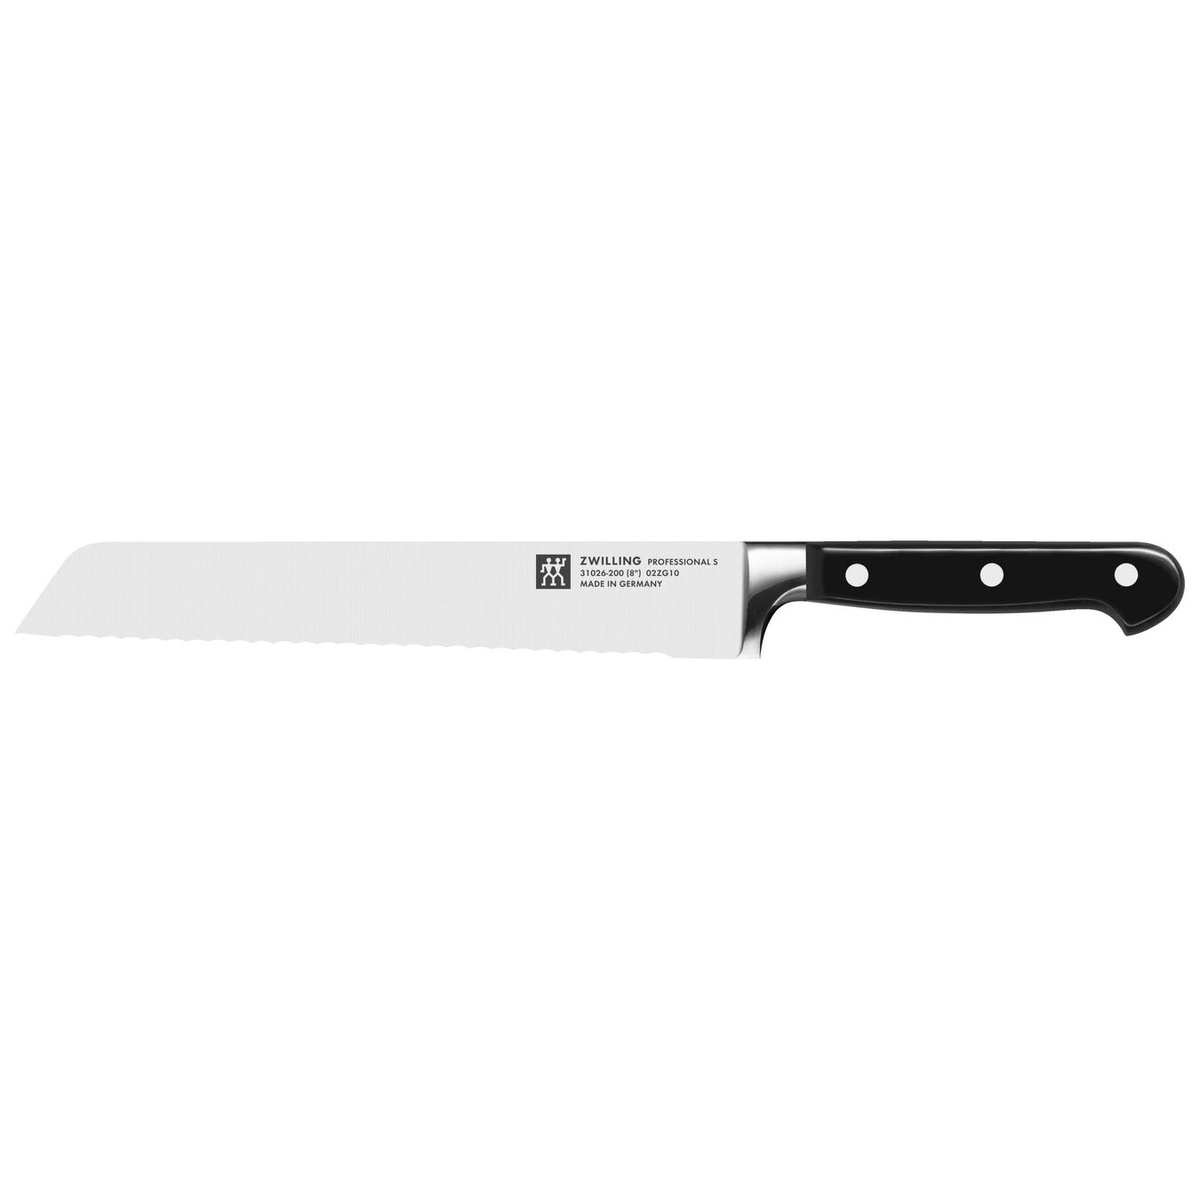 Нож для хлеба 20 см Zwilling Professional S фото